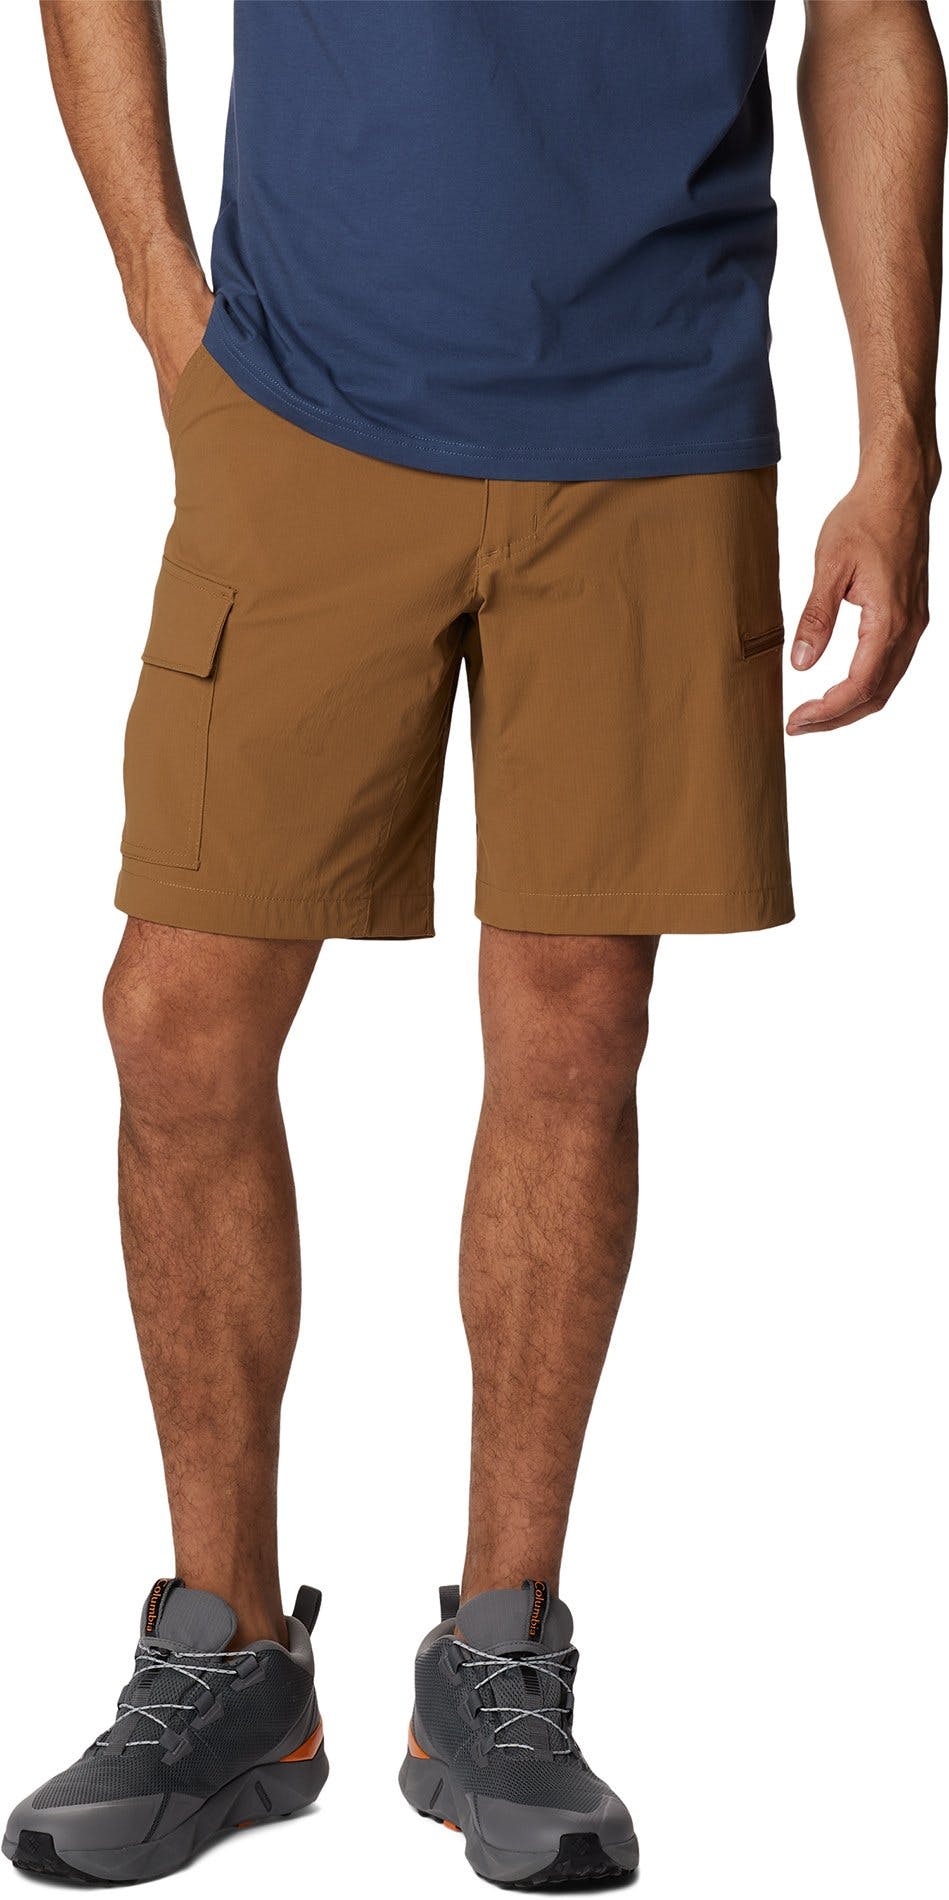 Product image for Newton Ridge II Shorts - Men's